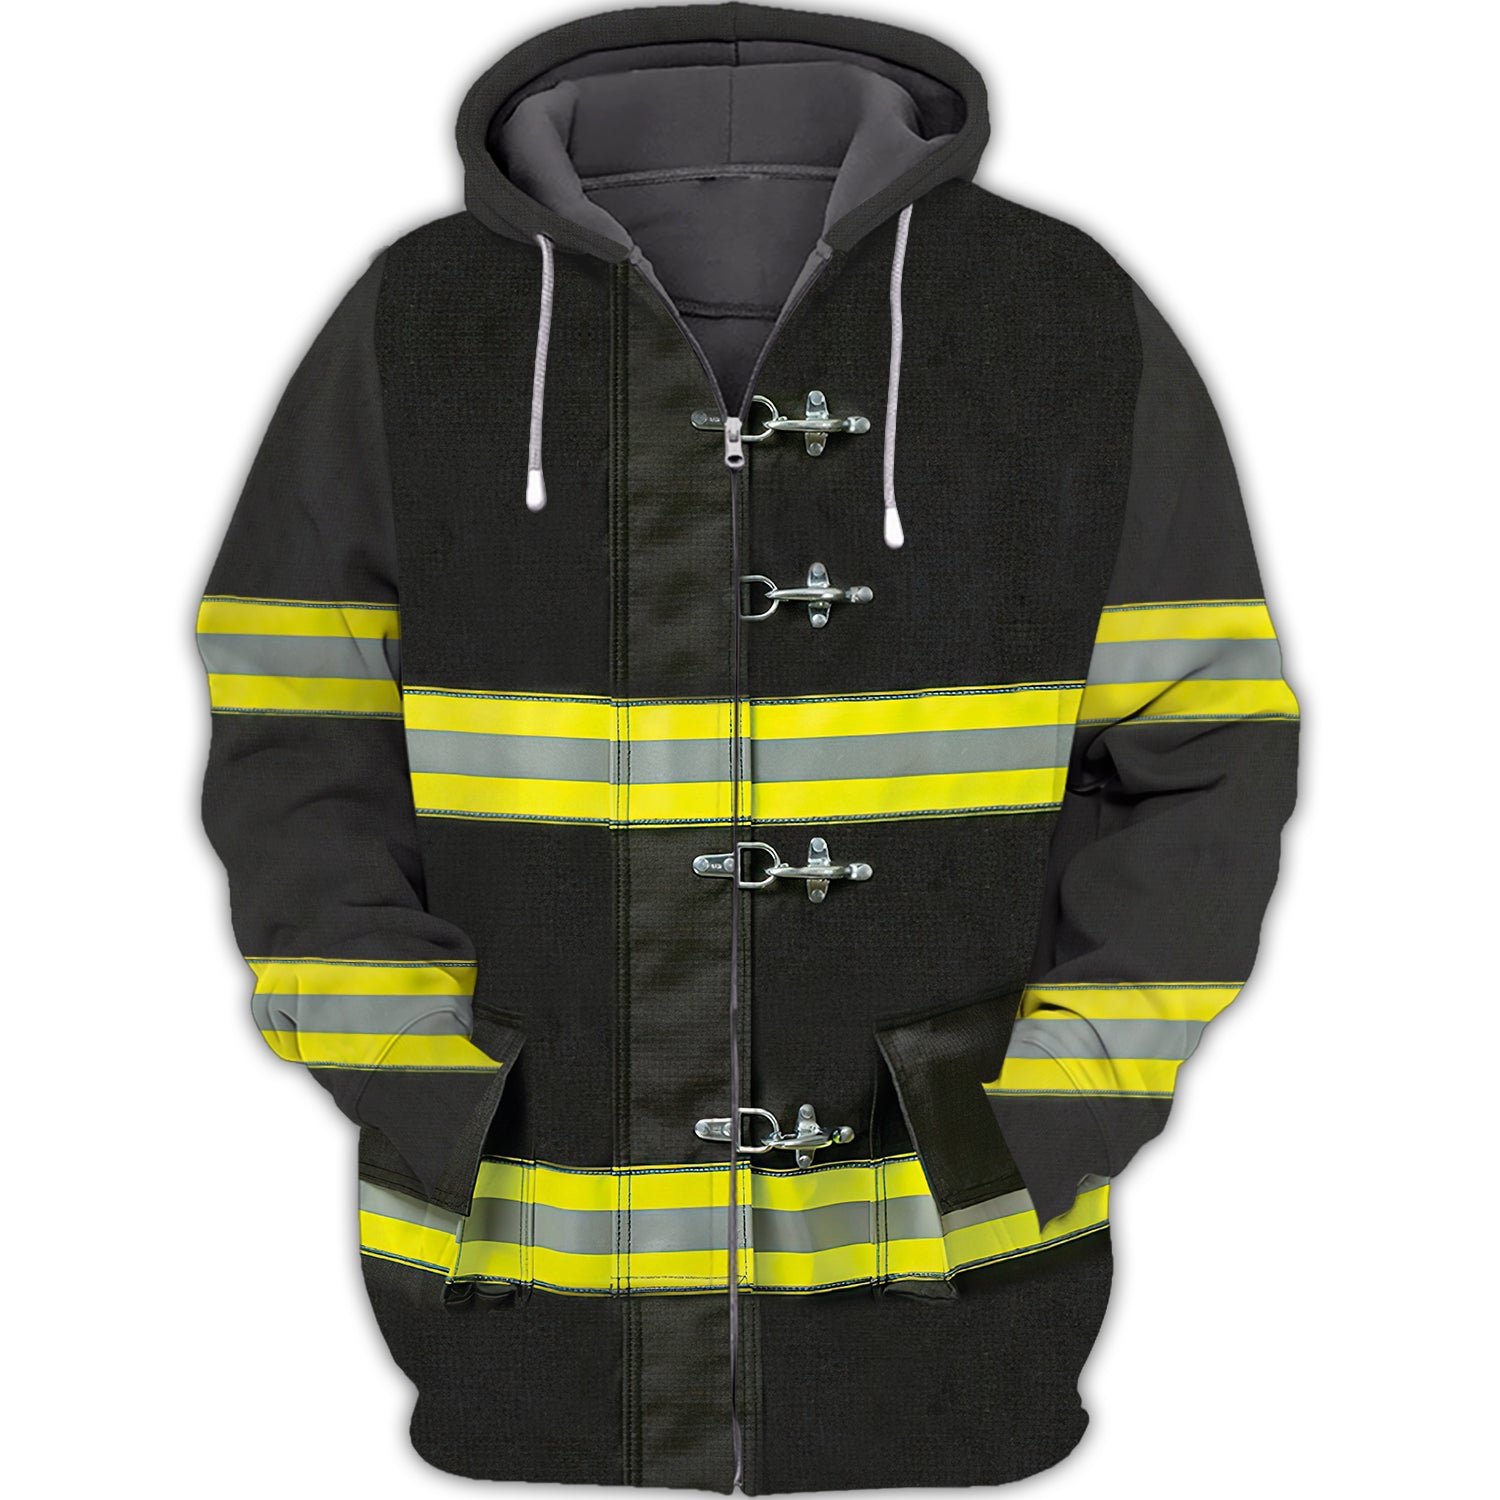 Firefighter - Personalized Name 3D Zipper Hoodie 07 - CV98 1K